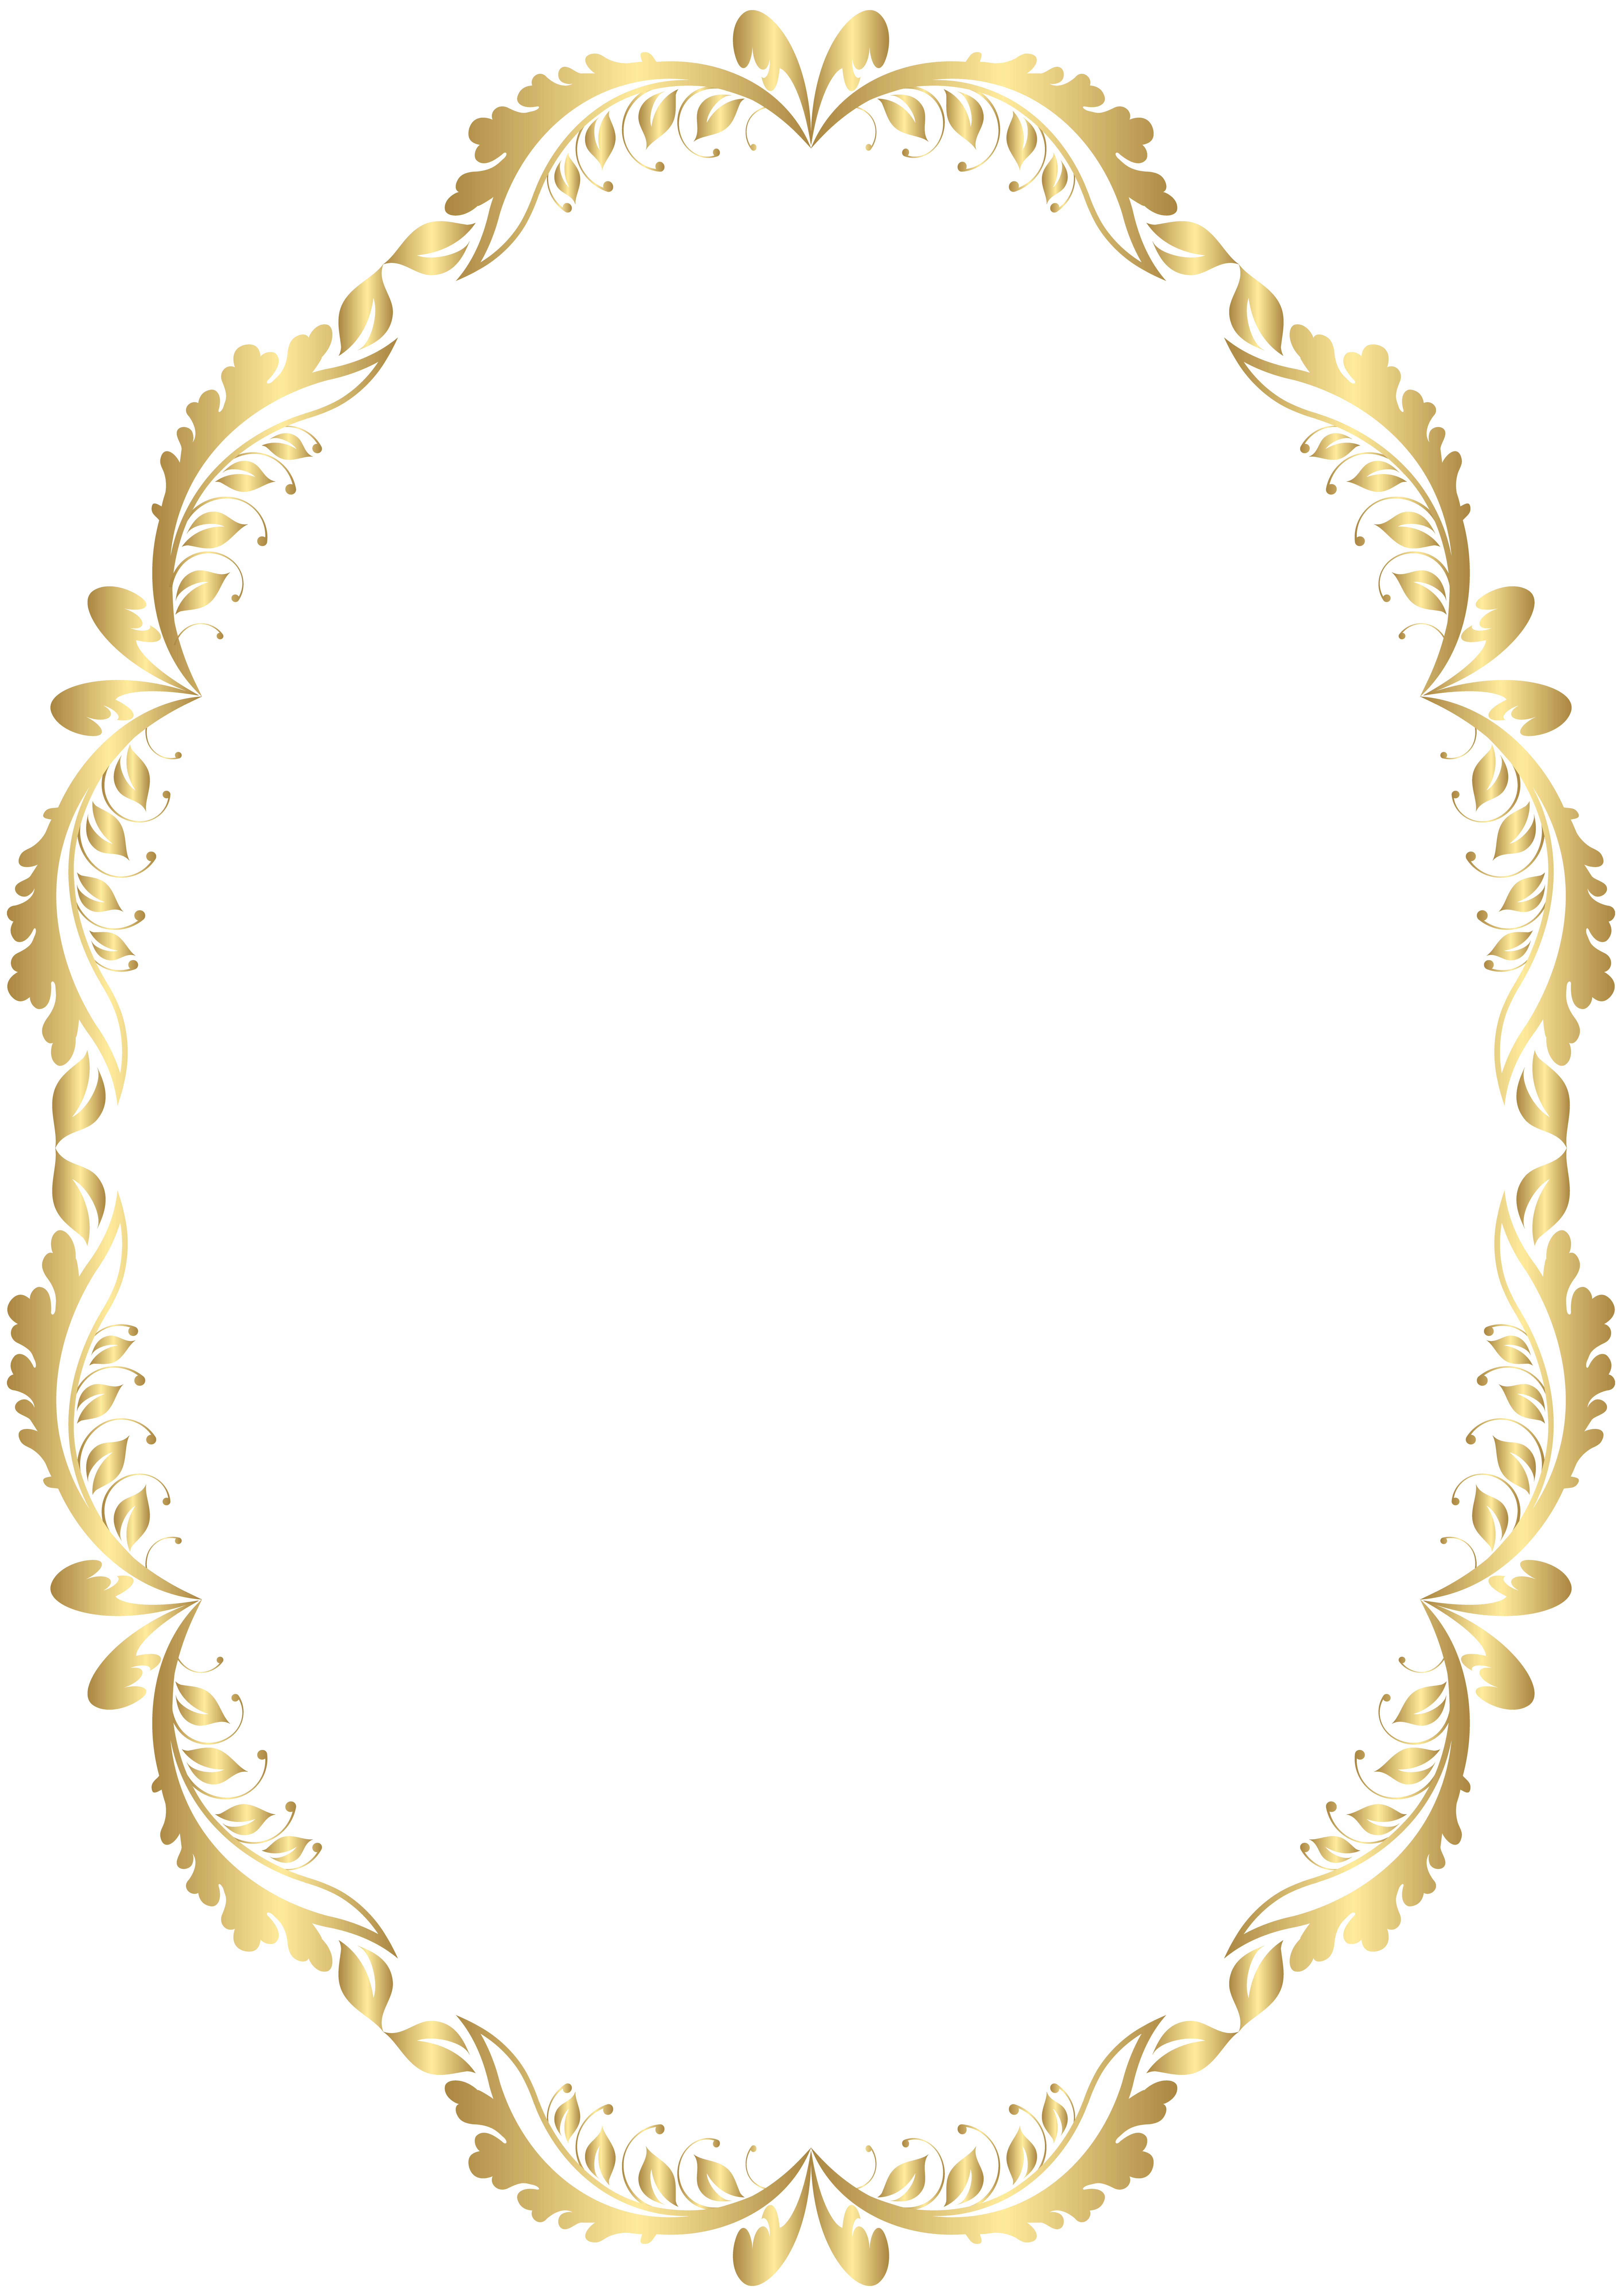 Clipart table photo frame. Golden oval border transparent